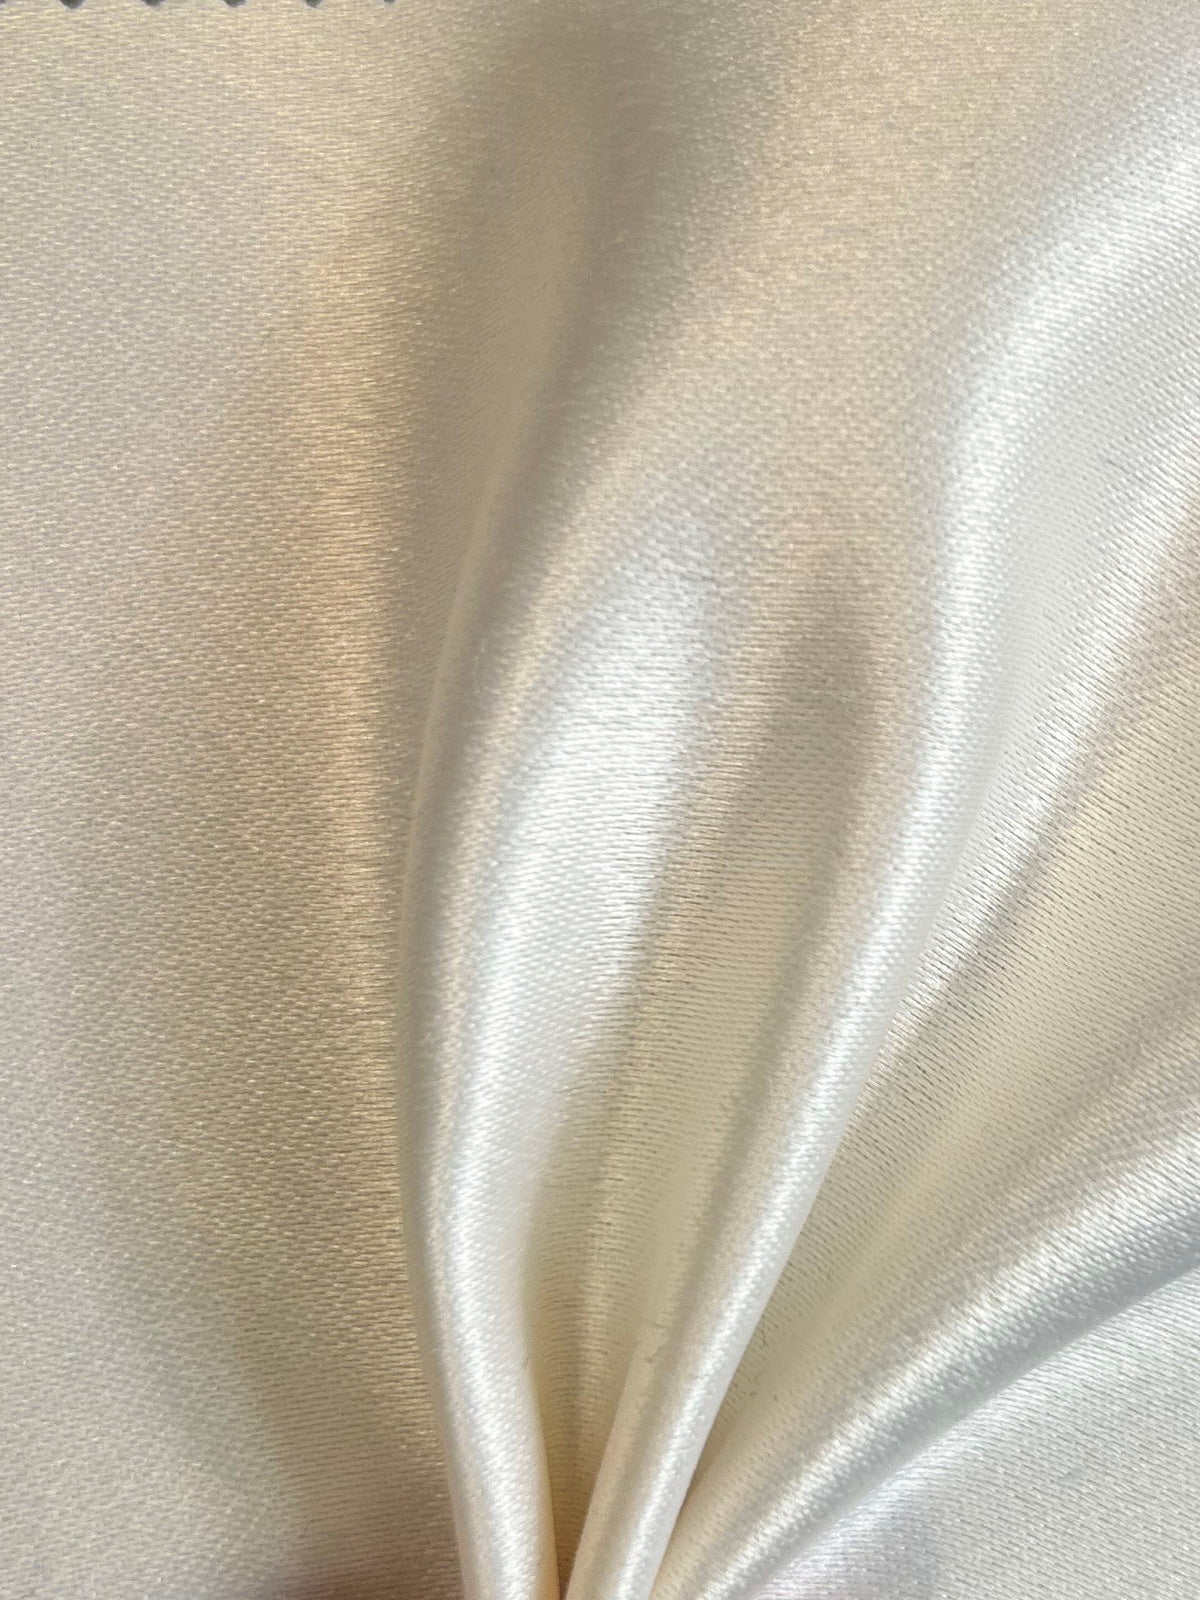 Satin duchesse polyester (148cm/58") - Scenery